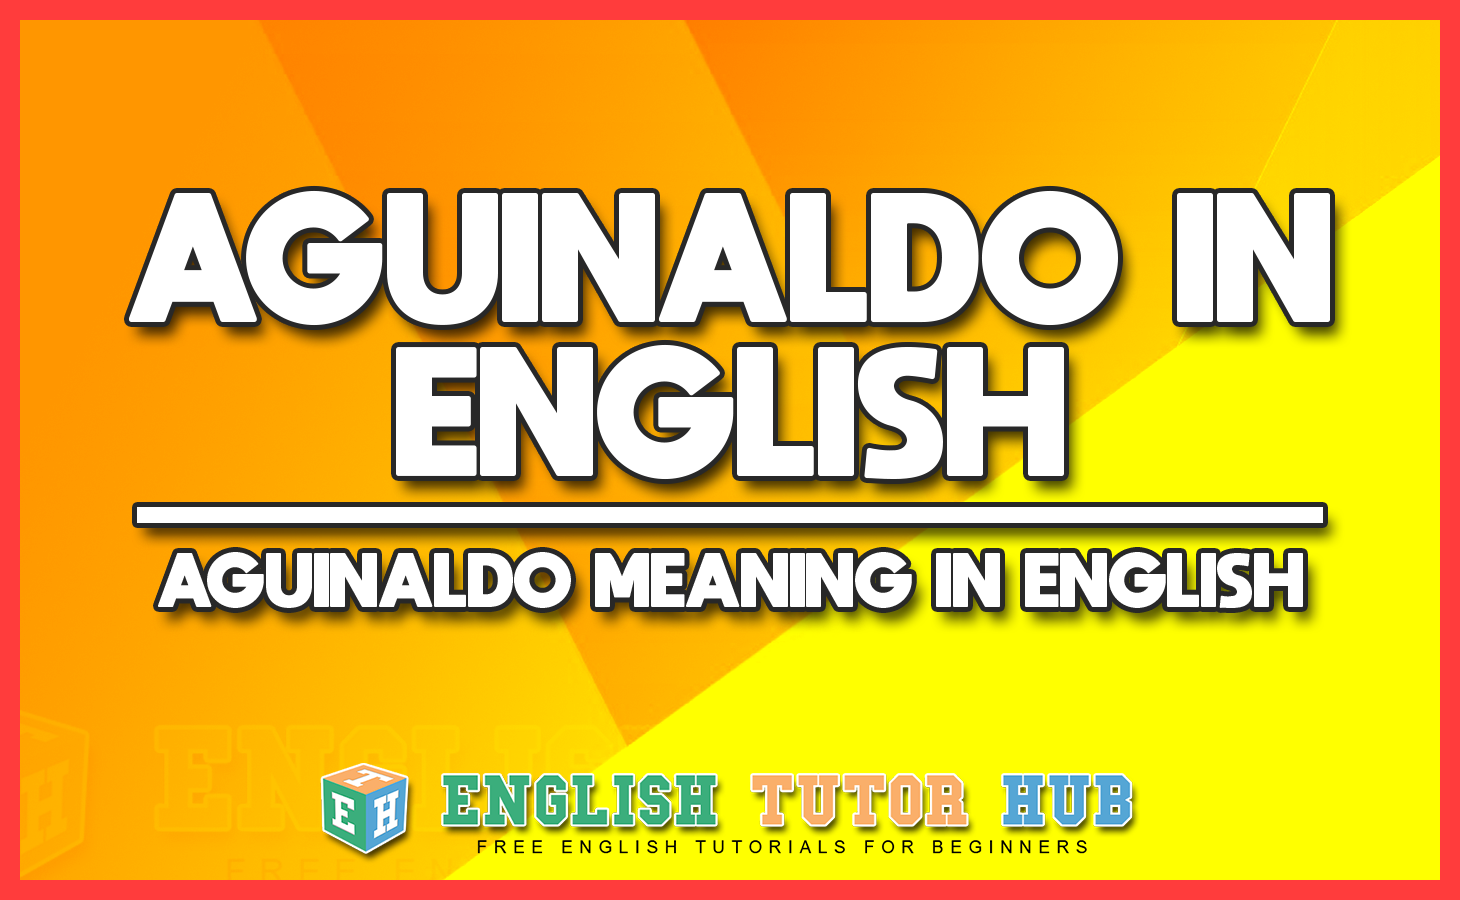 AGUINALDO IN ENGLISH - AGUINALDO MEANING IN ENGLISH